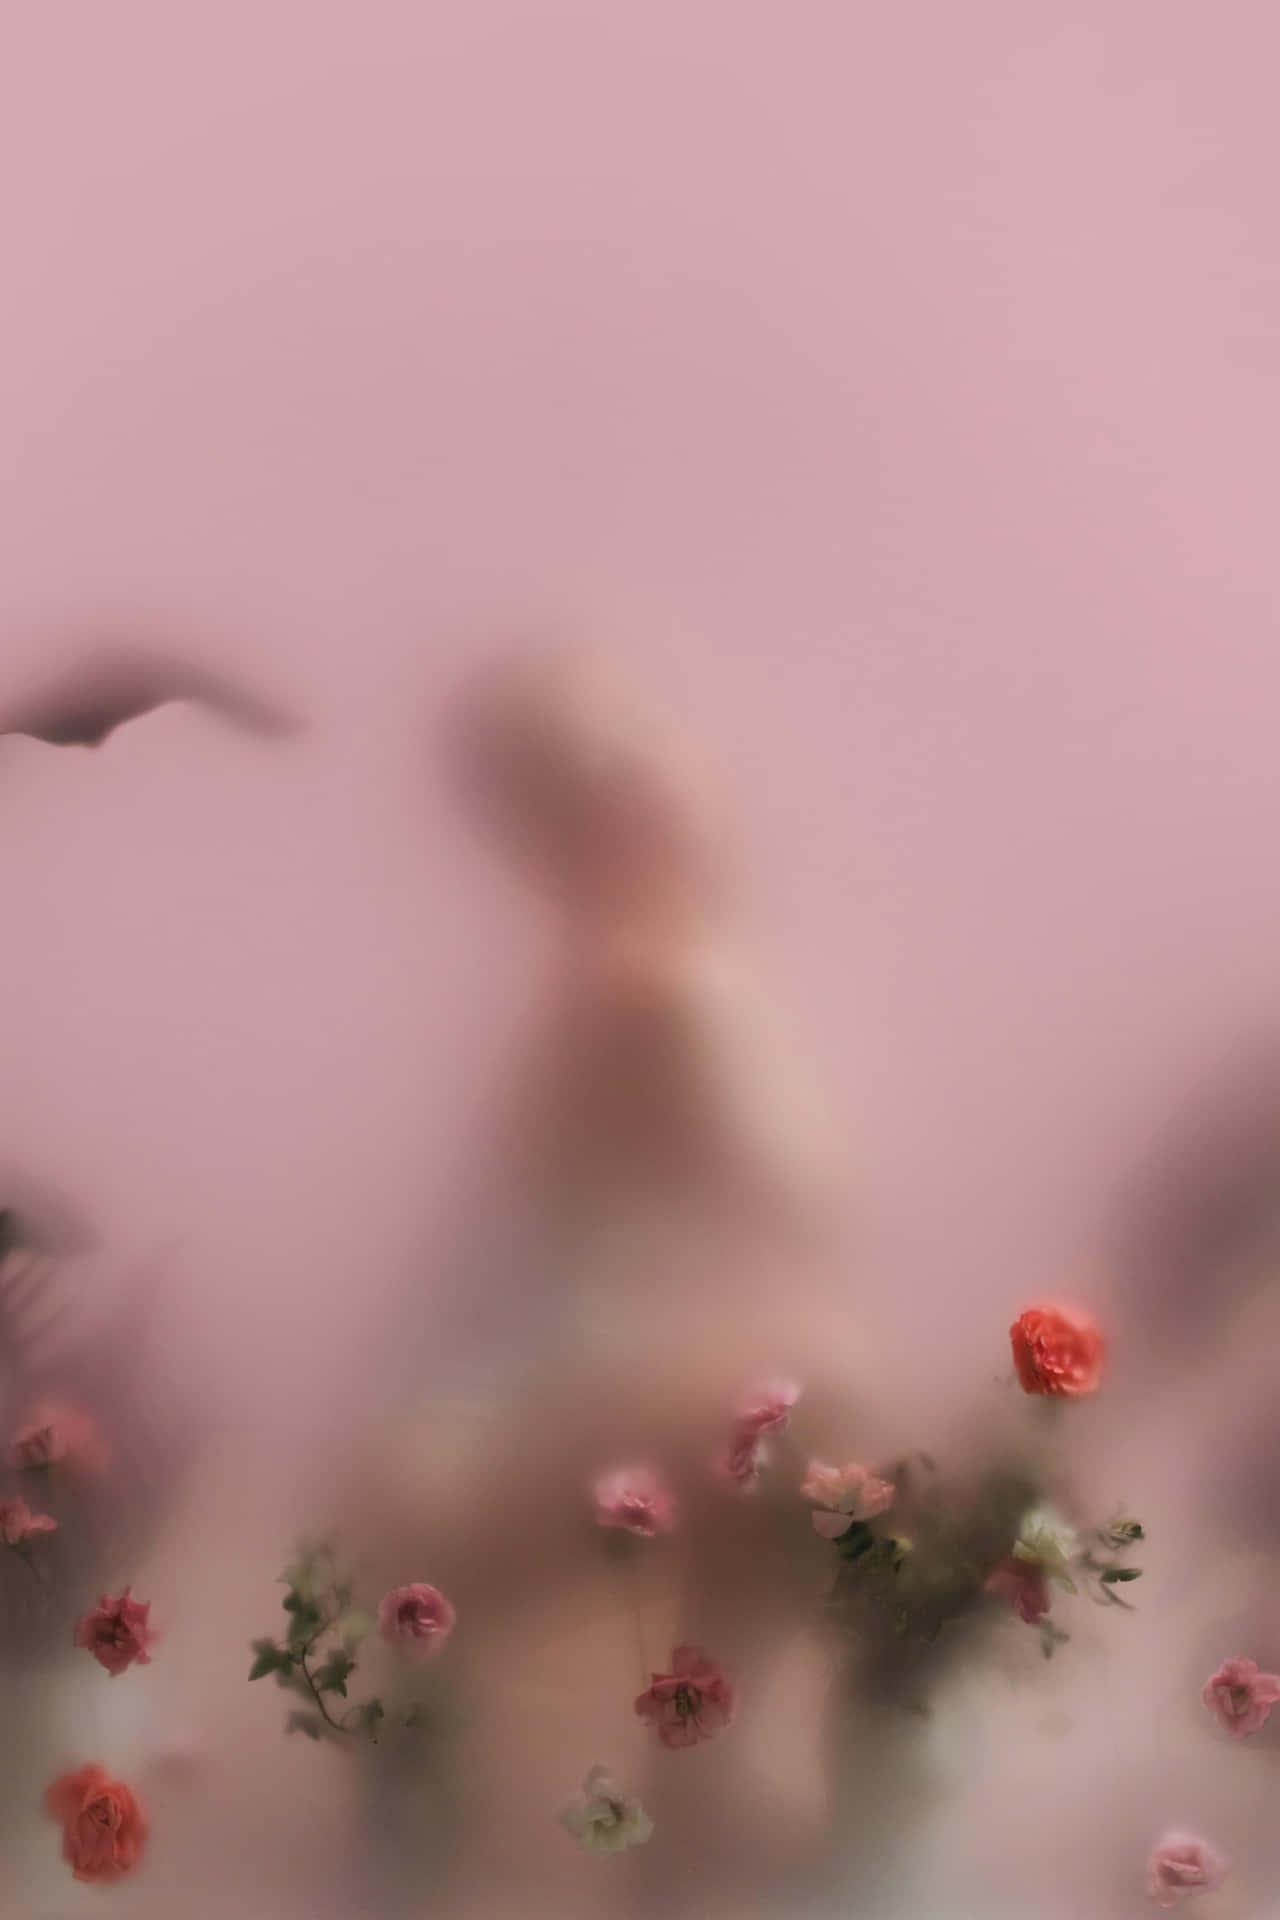 Blurred Floral Silhouette.jpg Wallpaper